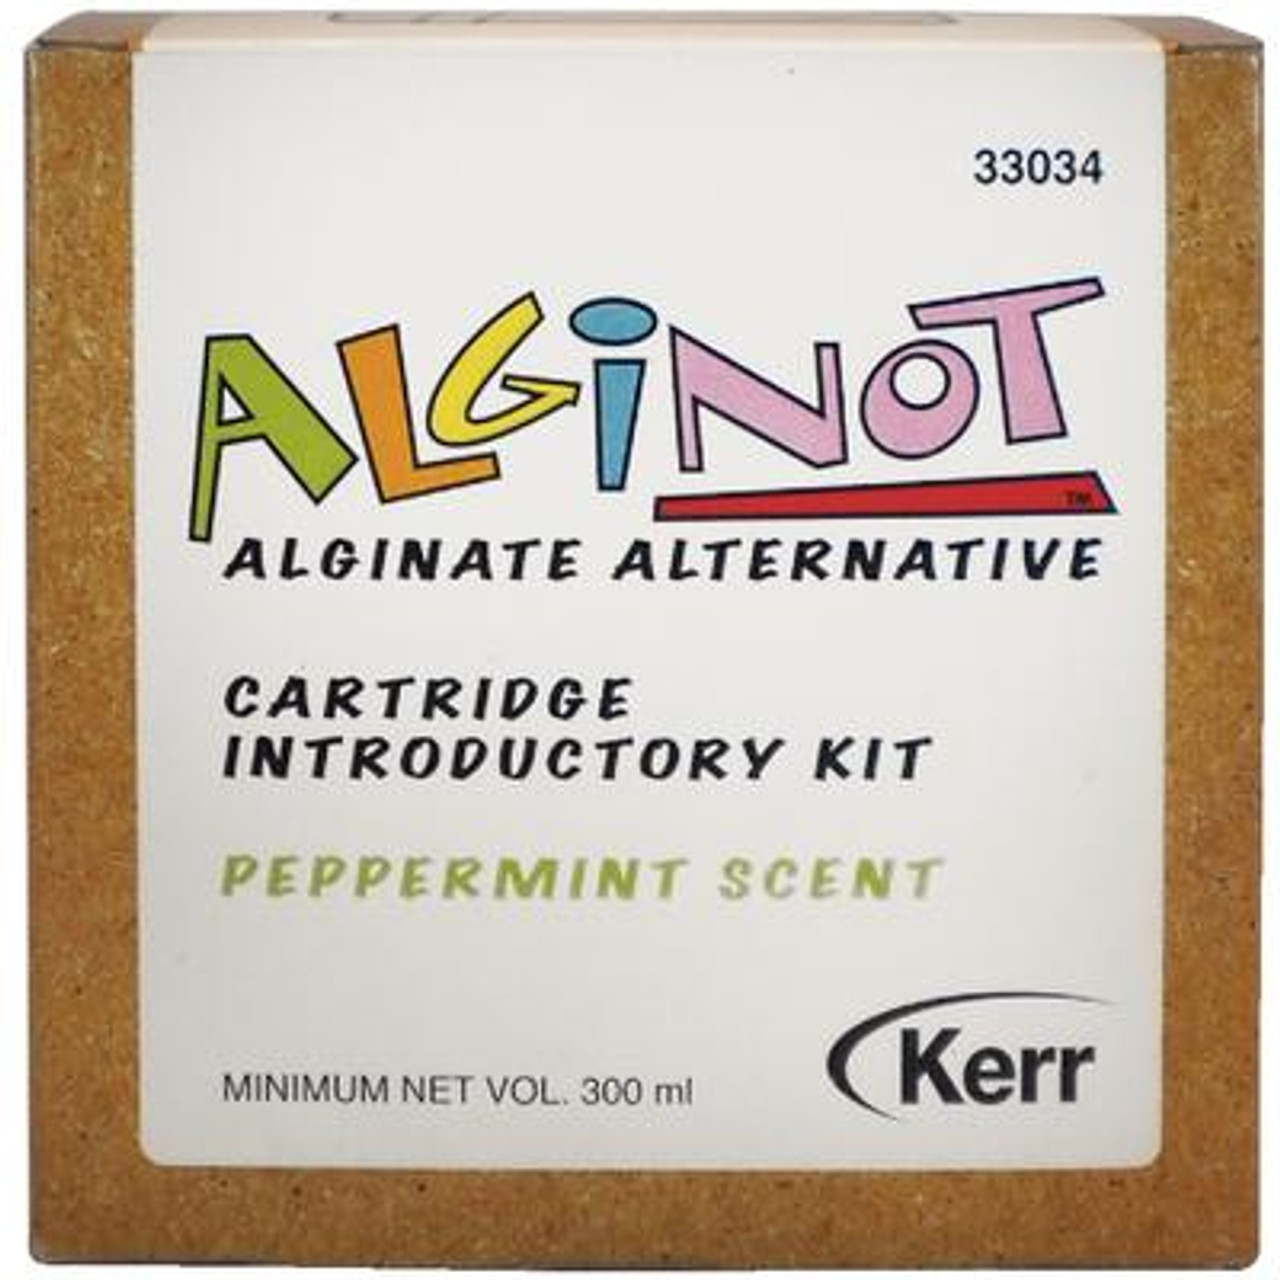 Kerr Alginot Alginate Substitutes 50 ml Cartridge Intro Kit, Regular Set